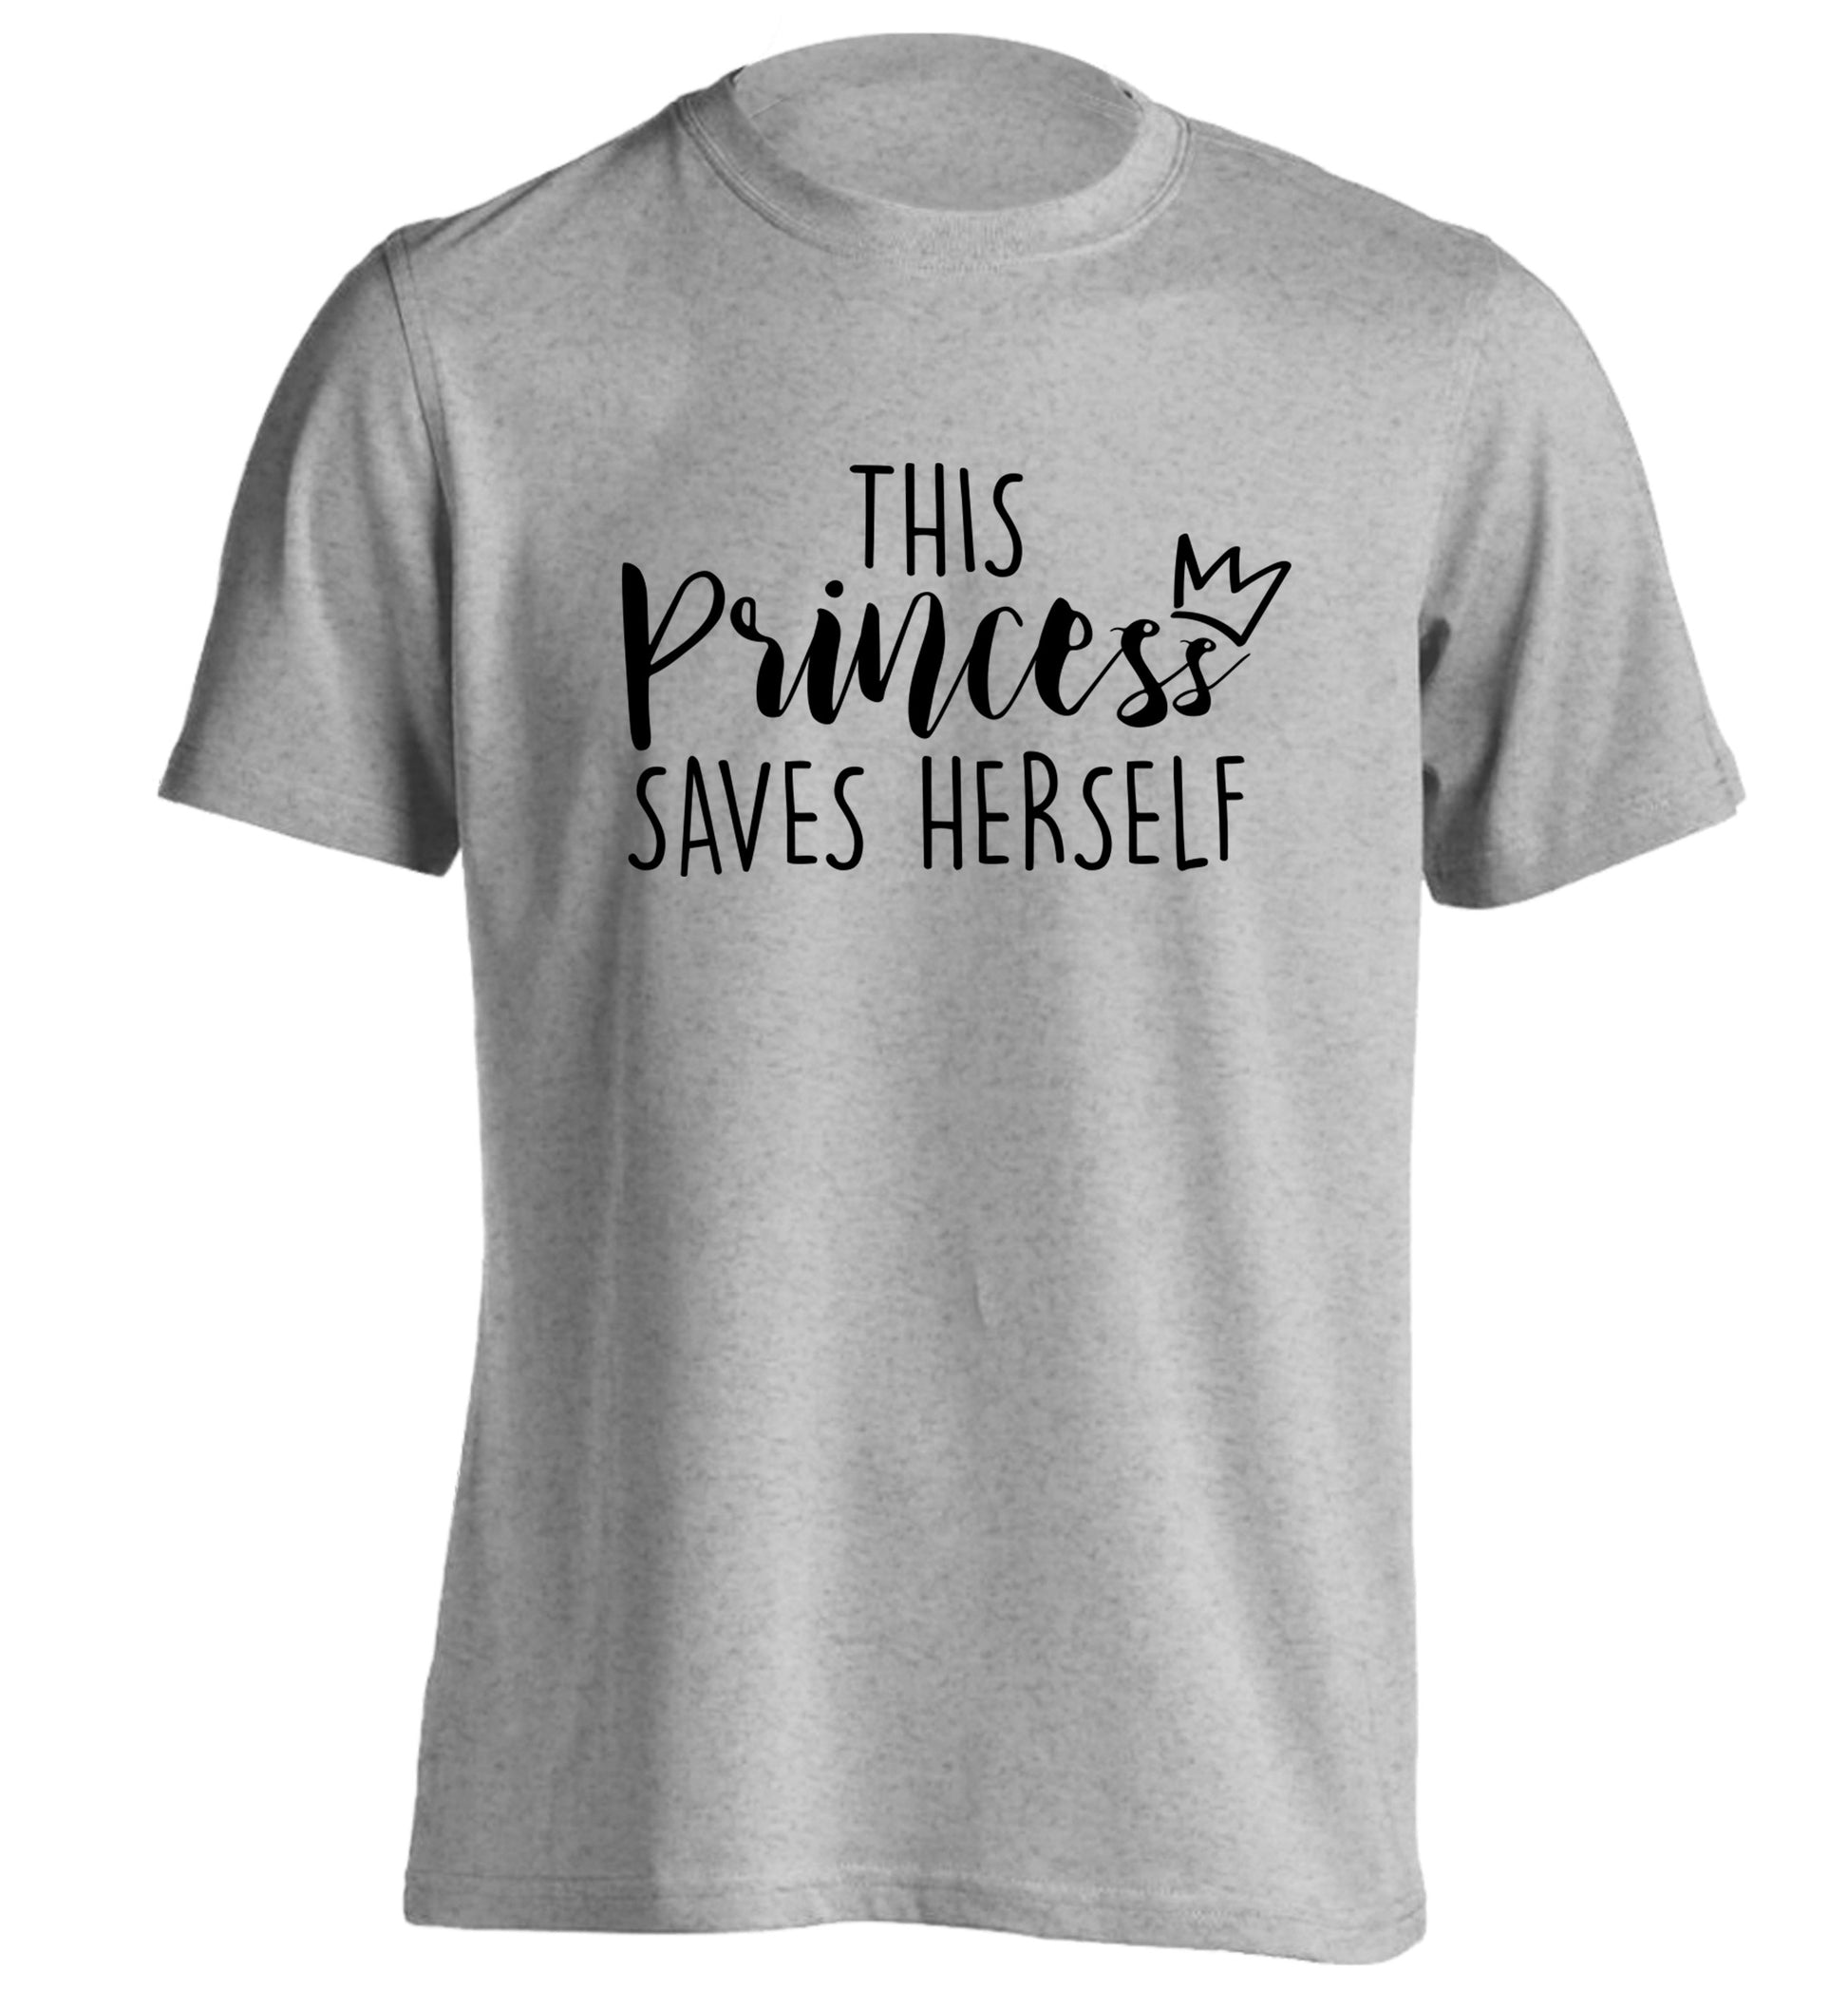 This princess saves herself adults unisex grey Tshirt 2XL